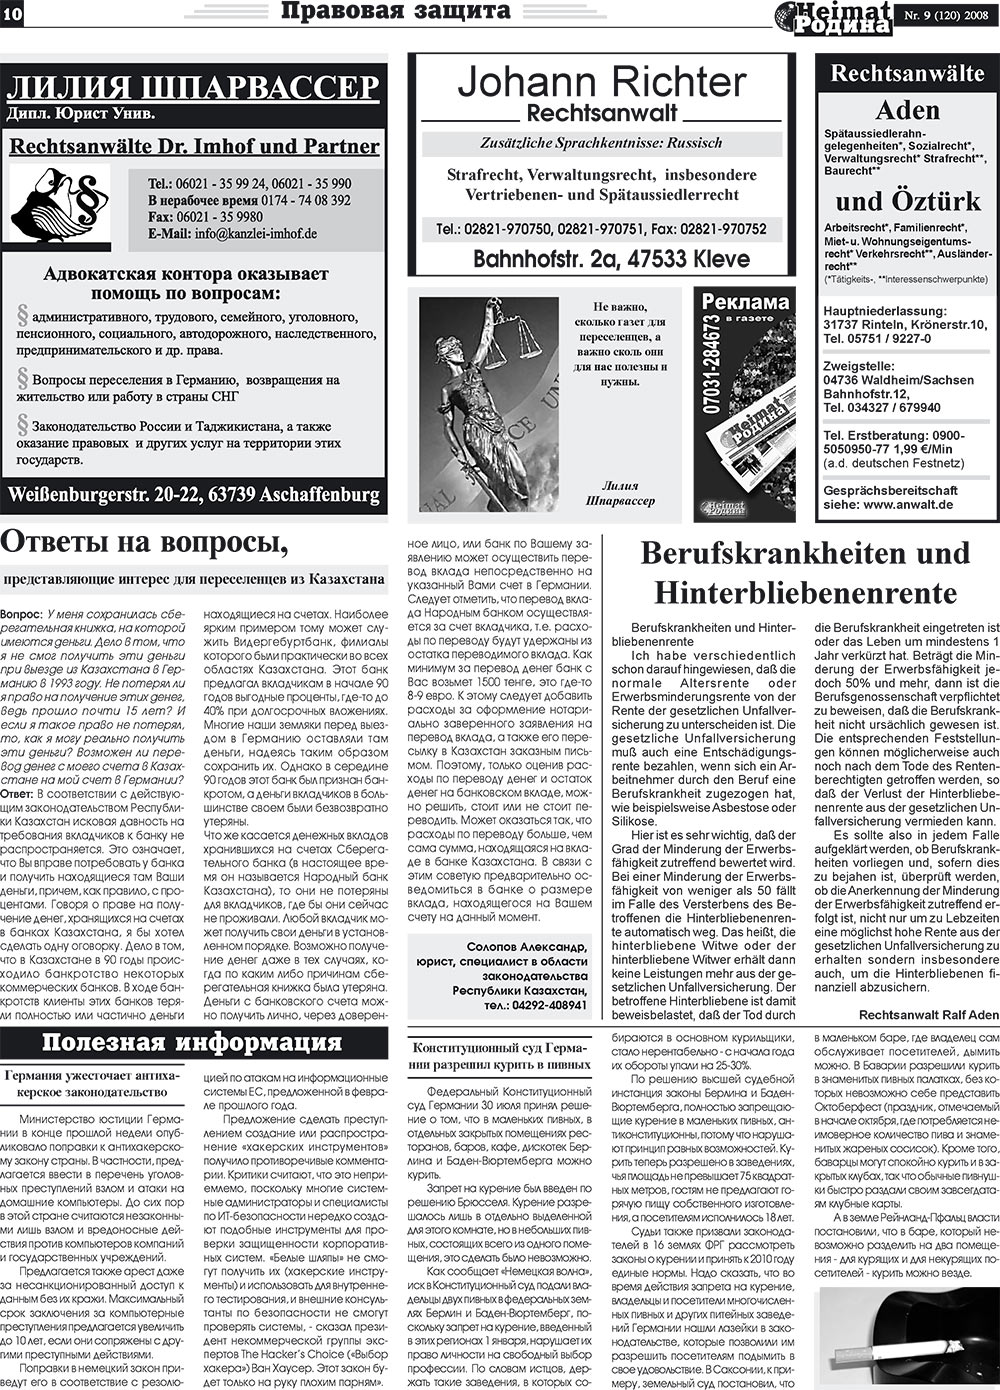 Heimat-Родина, газета. 2008 №9 стр.10